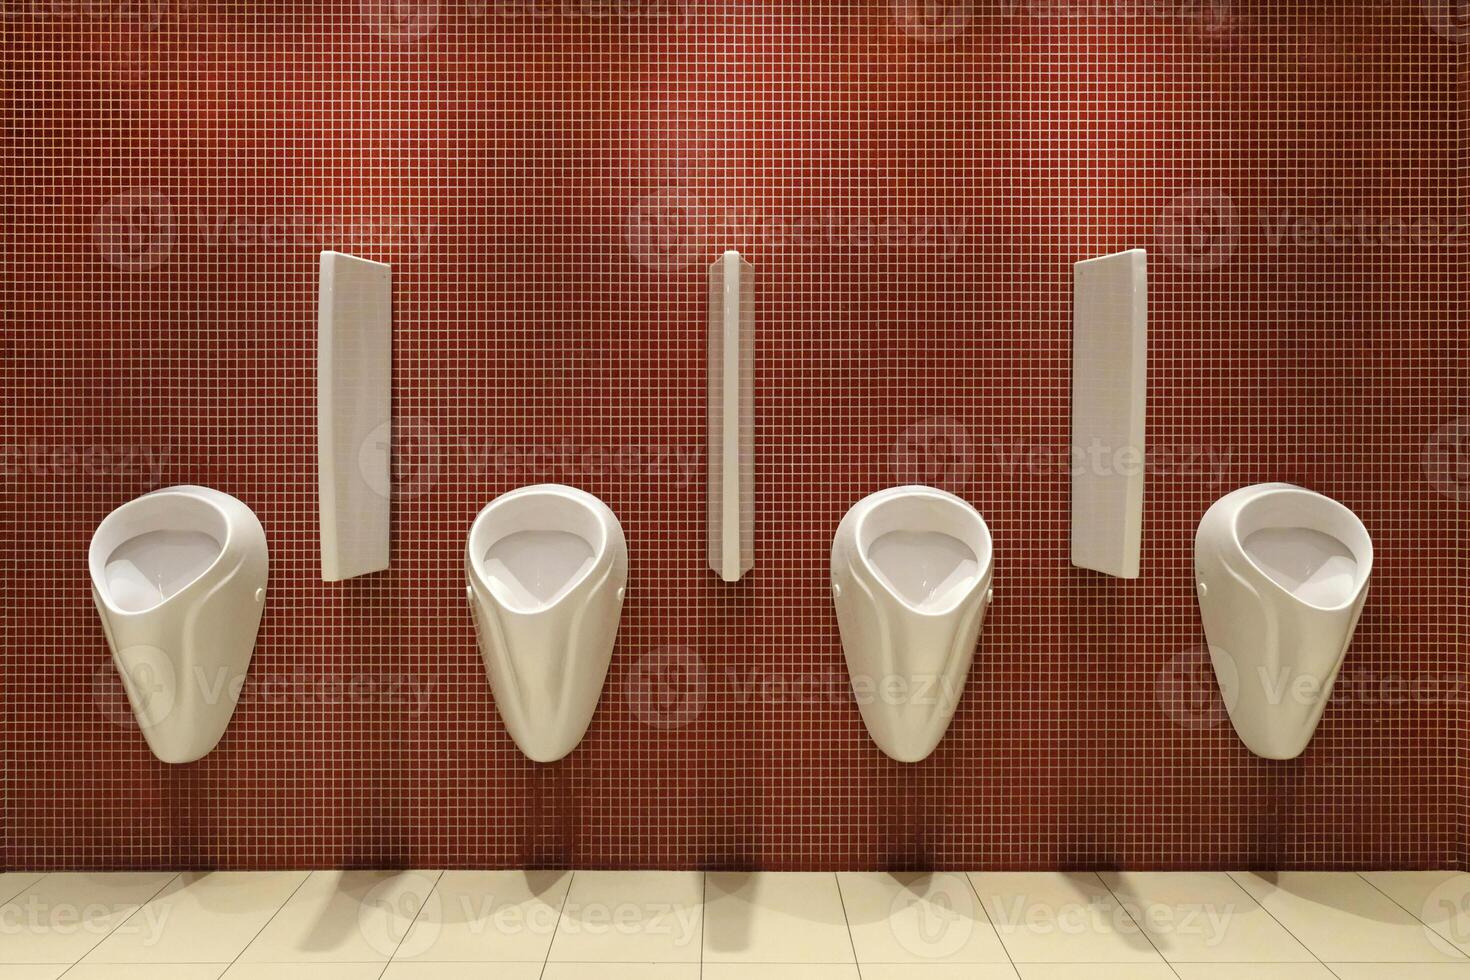 Urinals in a men's restroom photo